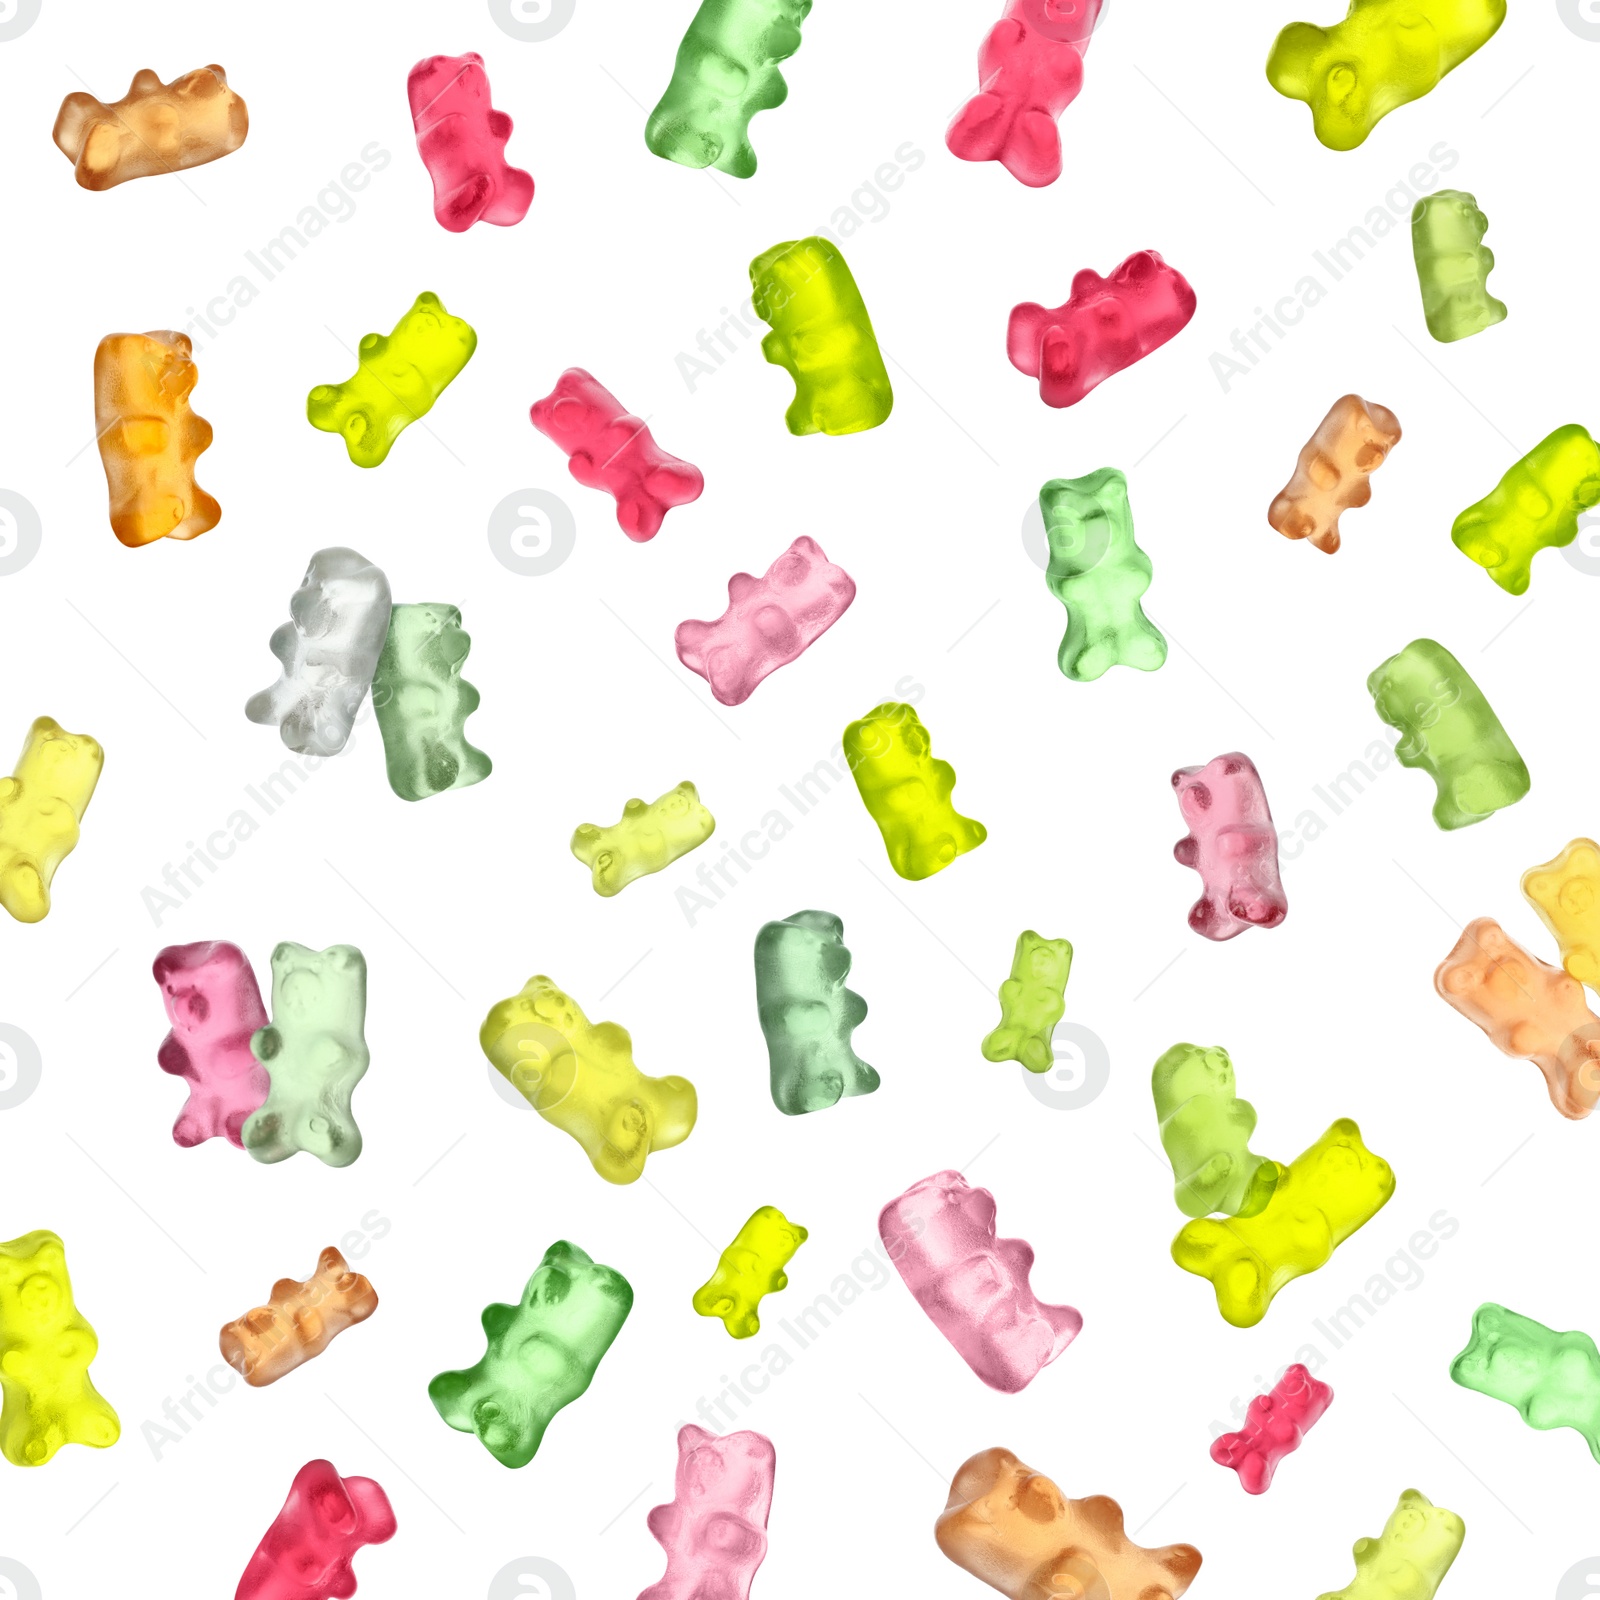 Image of Sweet gummy bears falling on white background